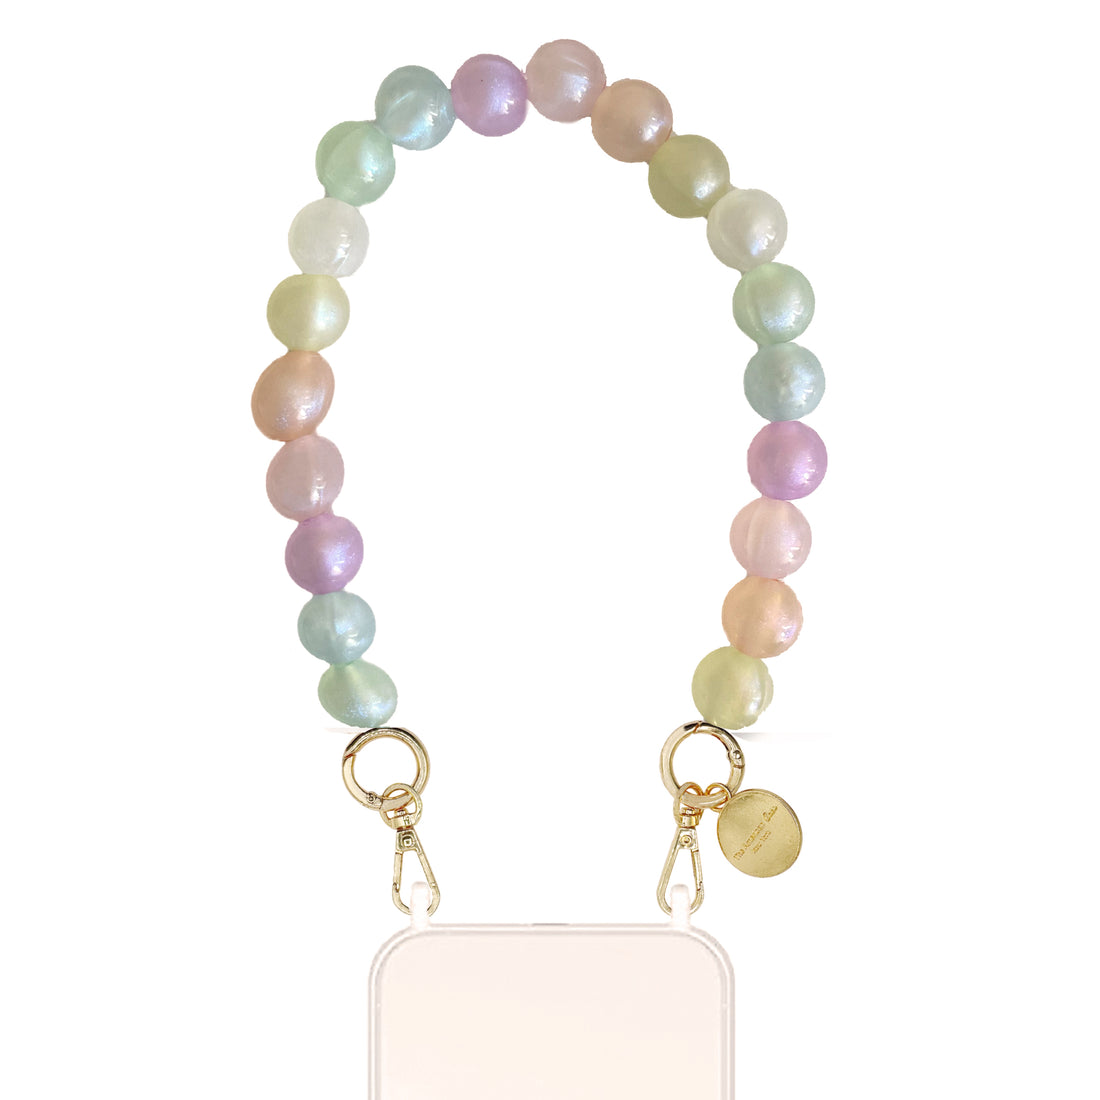 Jade - Glow in the Dark Glitter Rainbow Bead Chain With Golden Carabiners